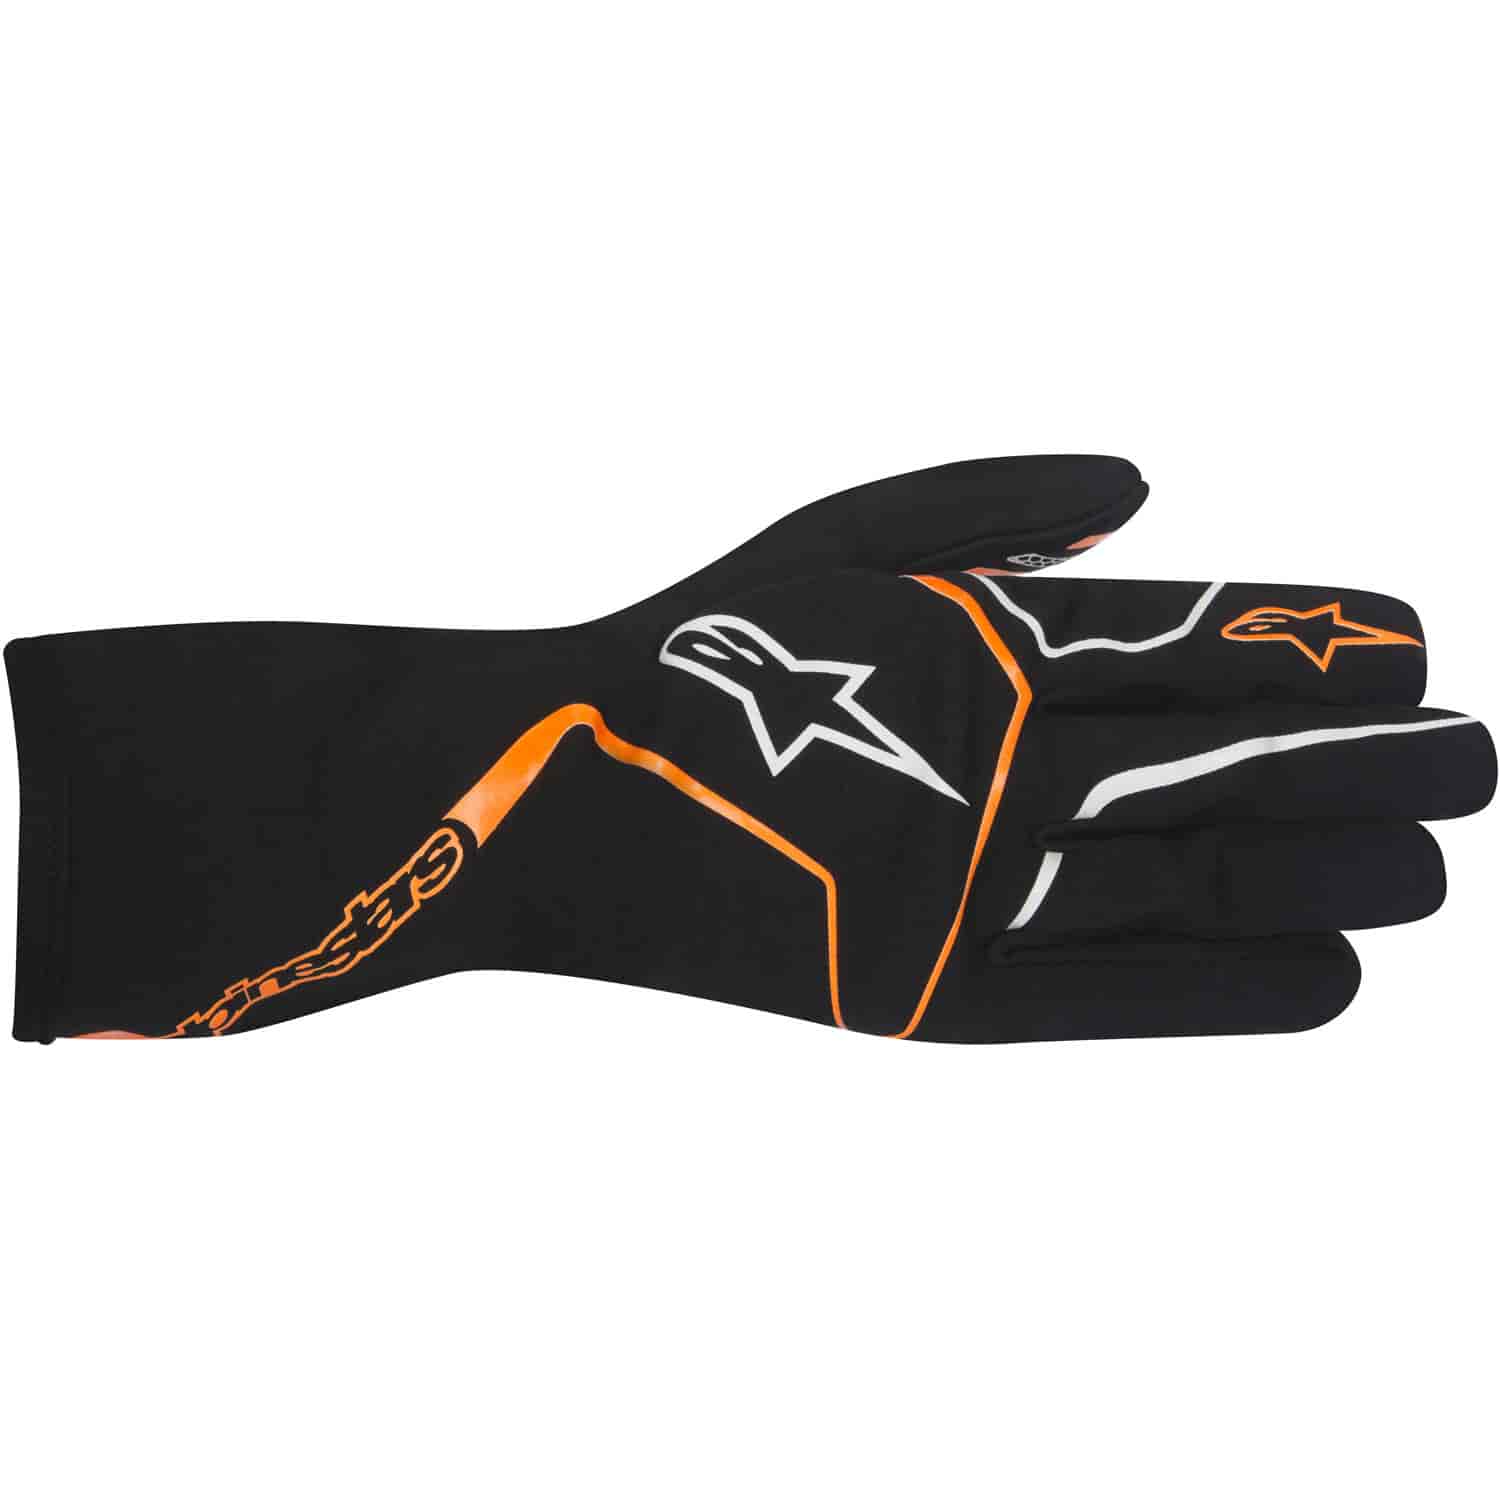 Tech 1-K Race S Youth Gloves Black/Orange Fluorescent